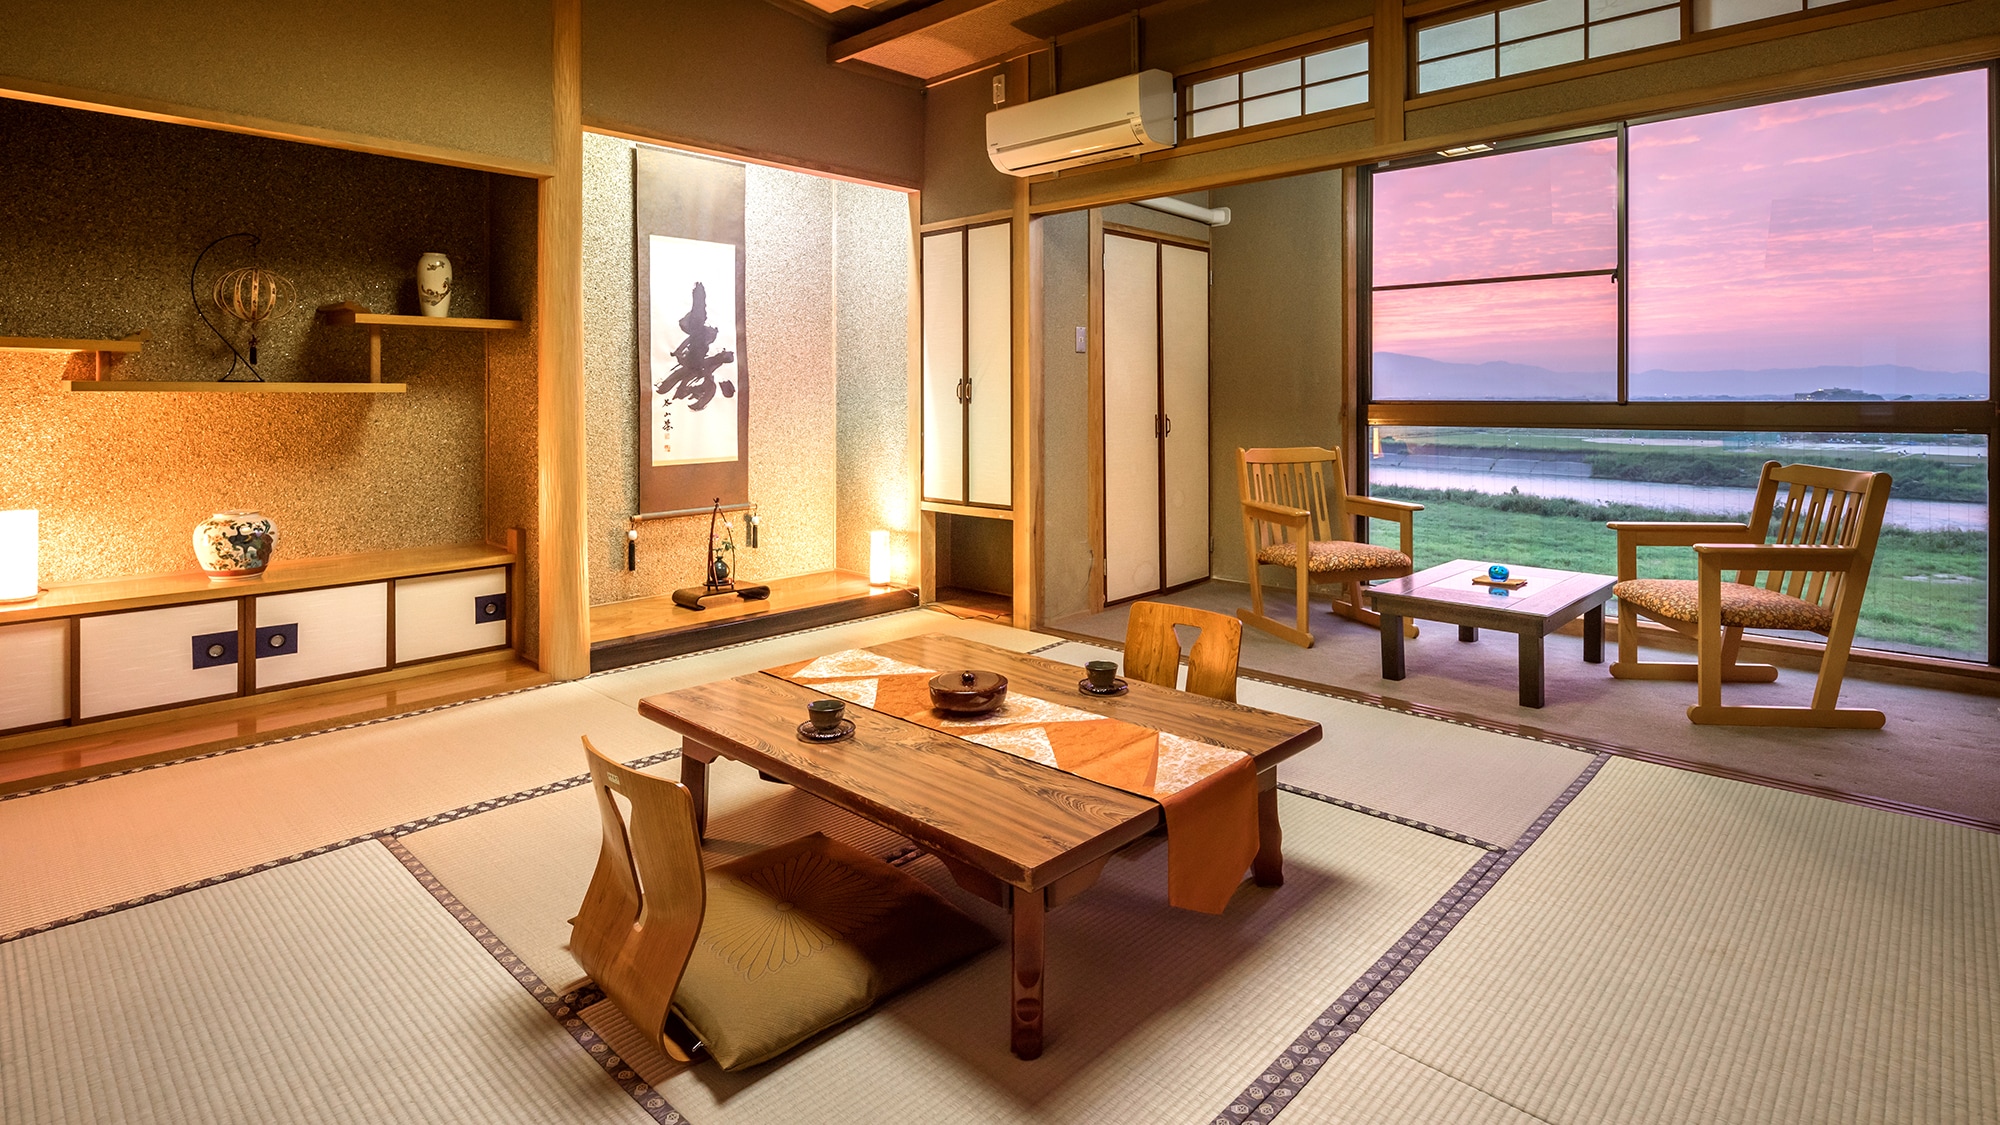 4F Japanese-style room 8 tatami mats